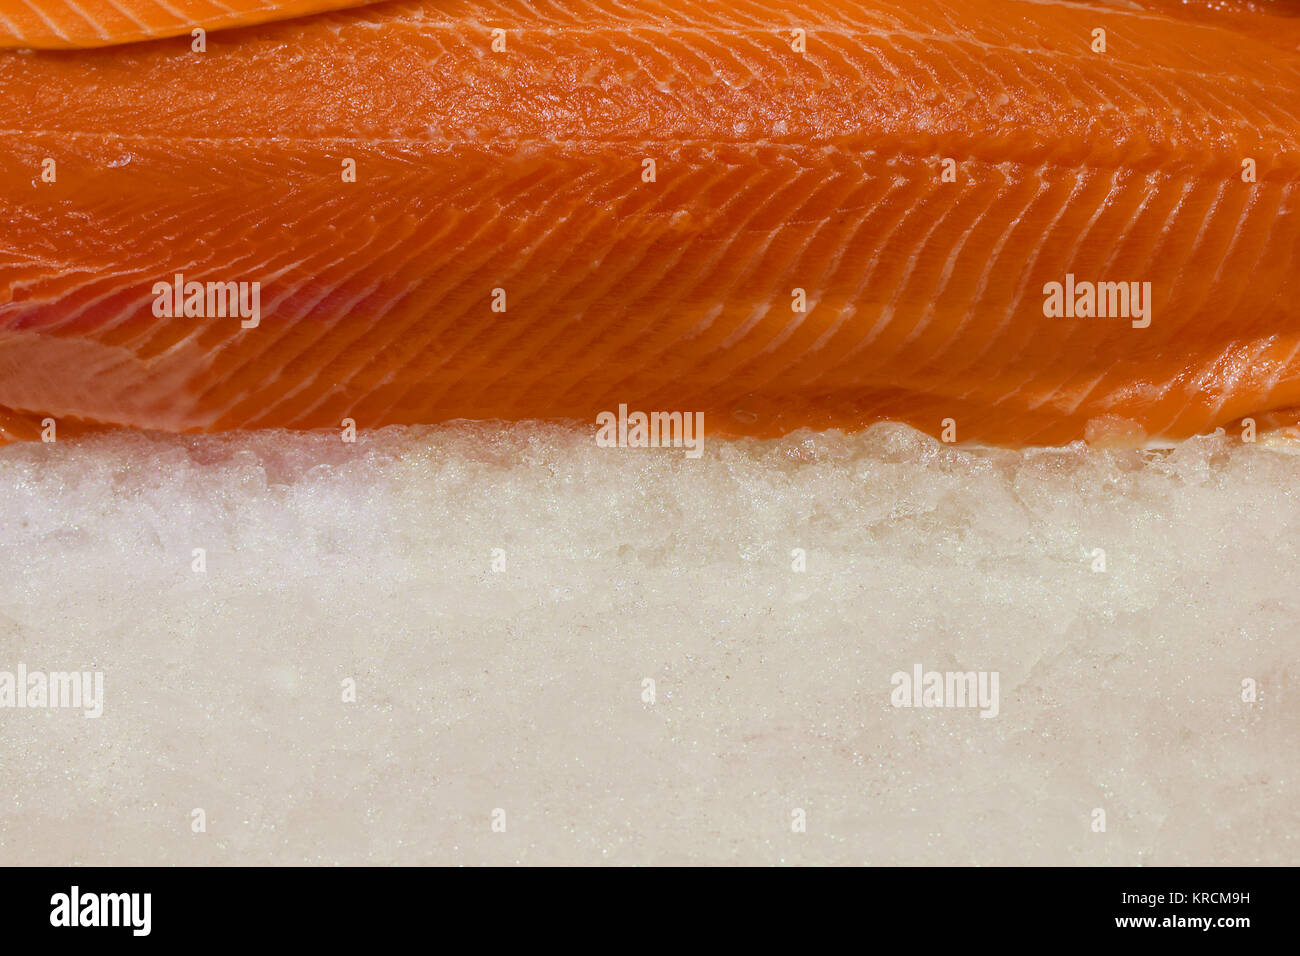 Fresh salmon fillet on ice. Stock Photo